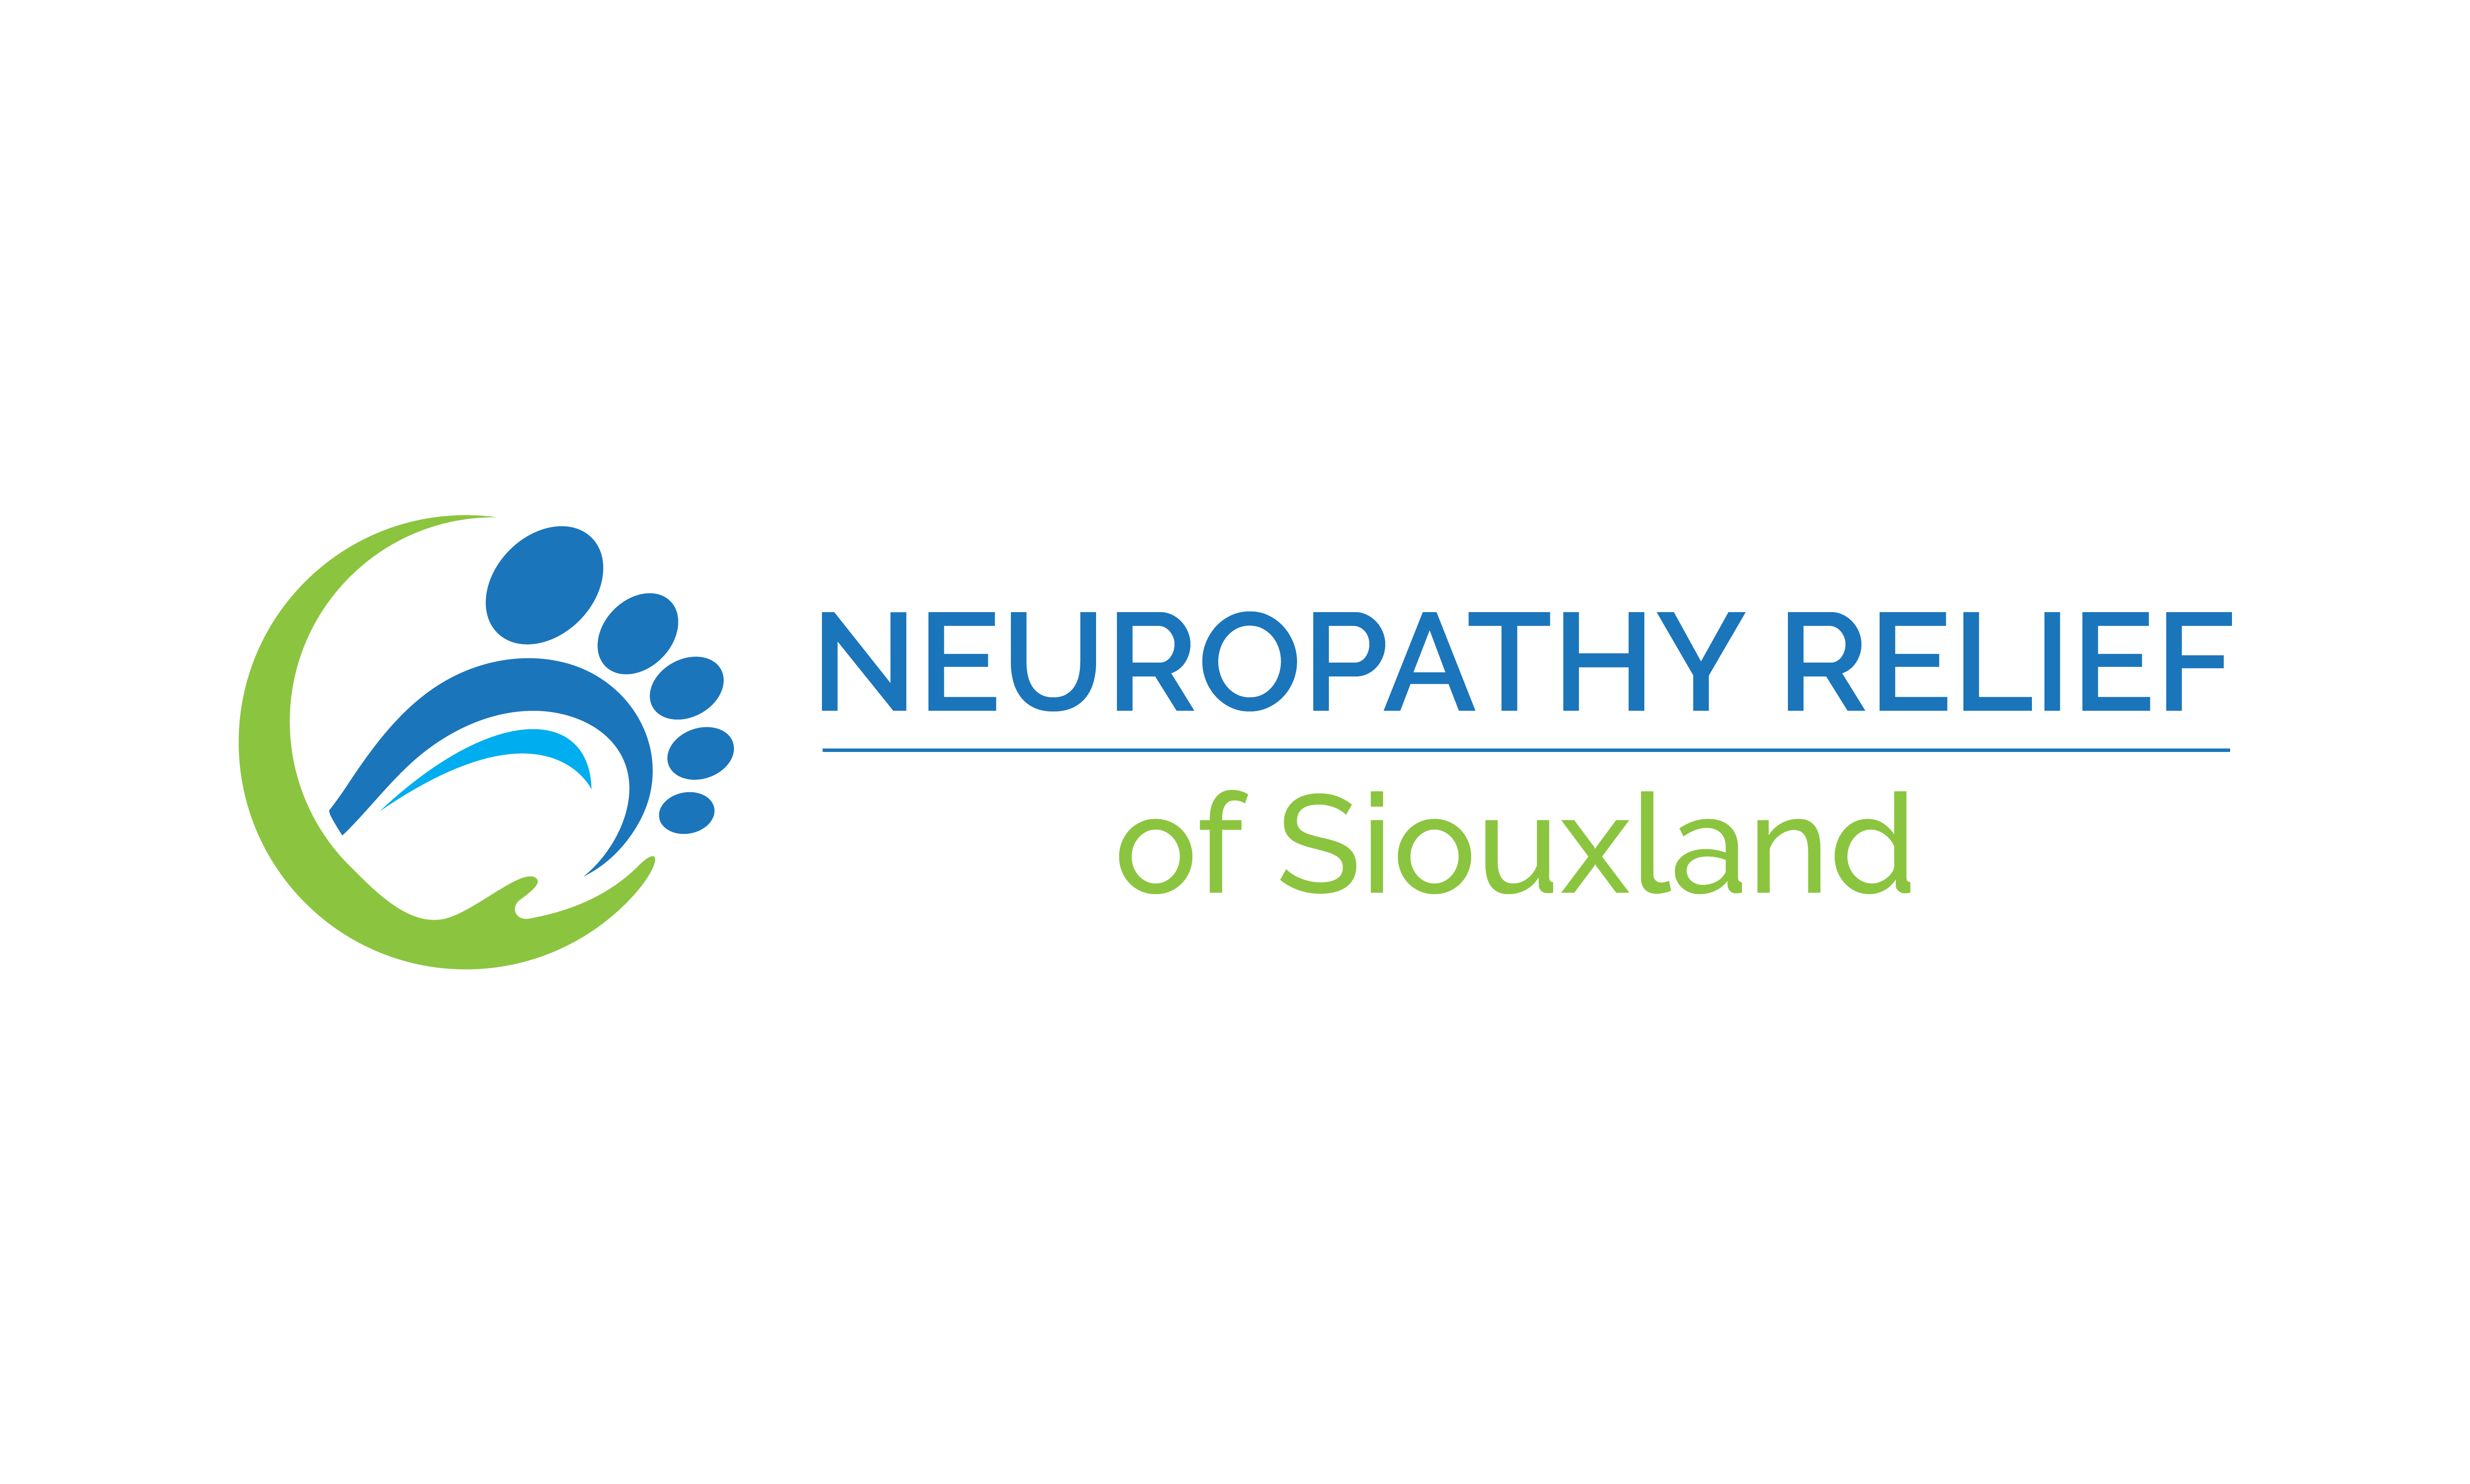 Neuropathy 